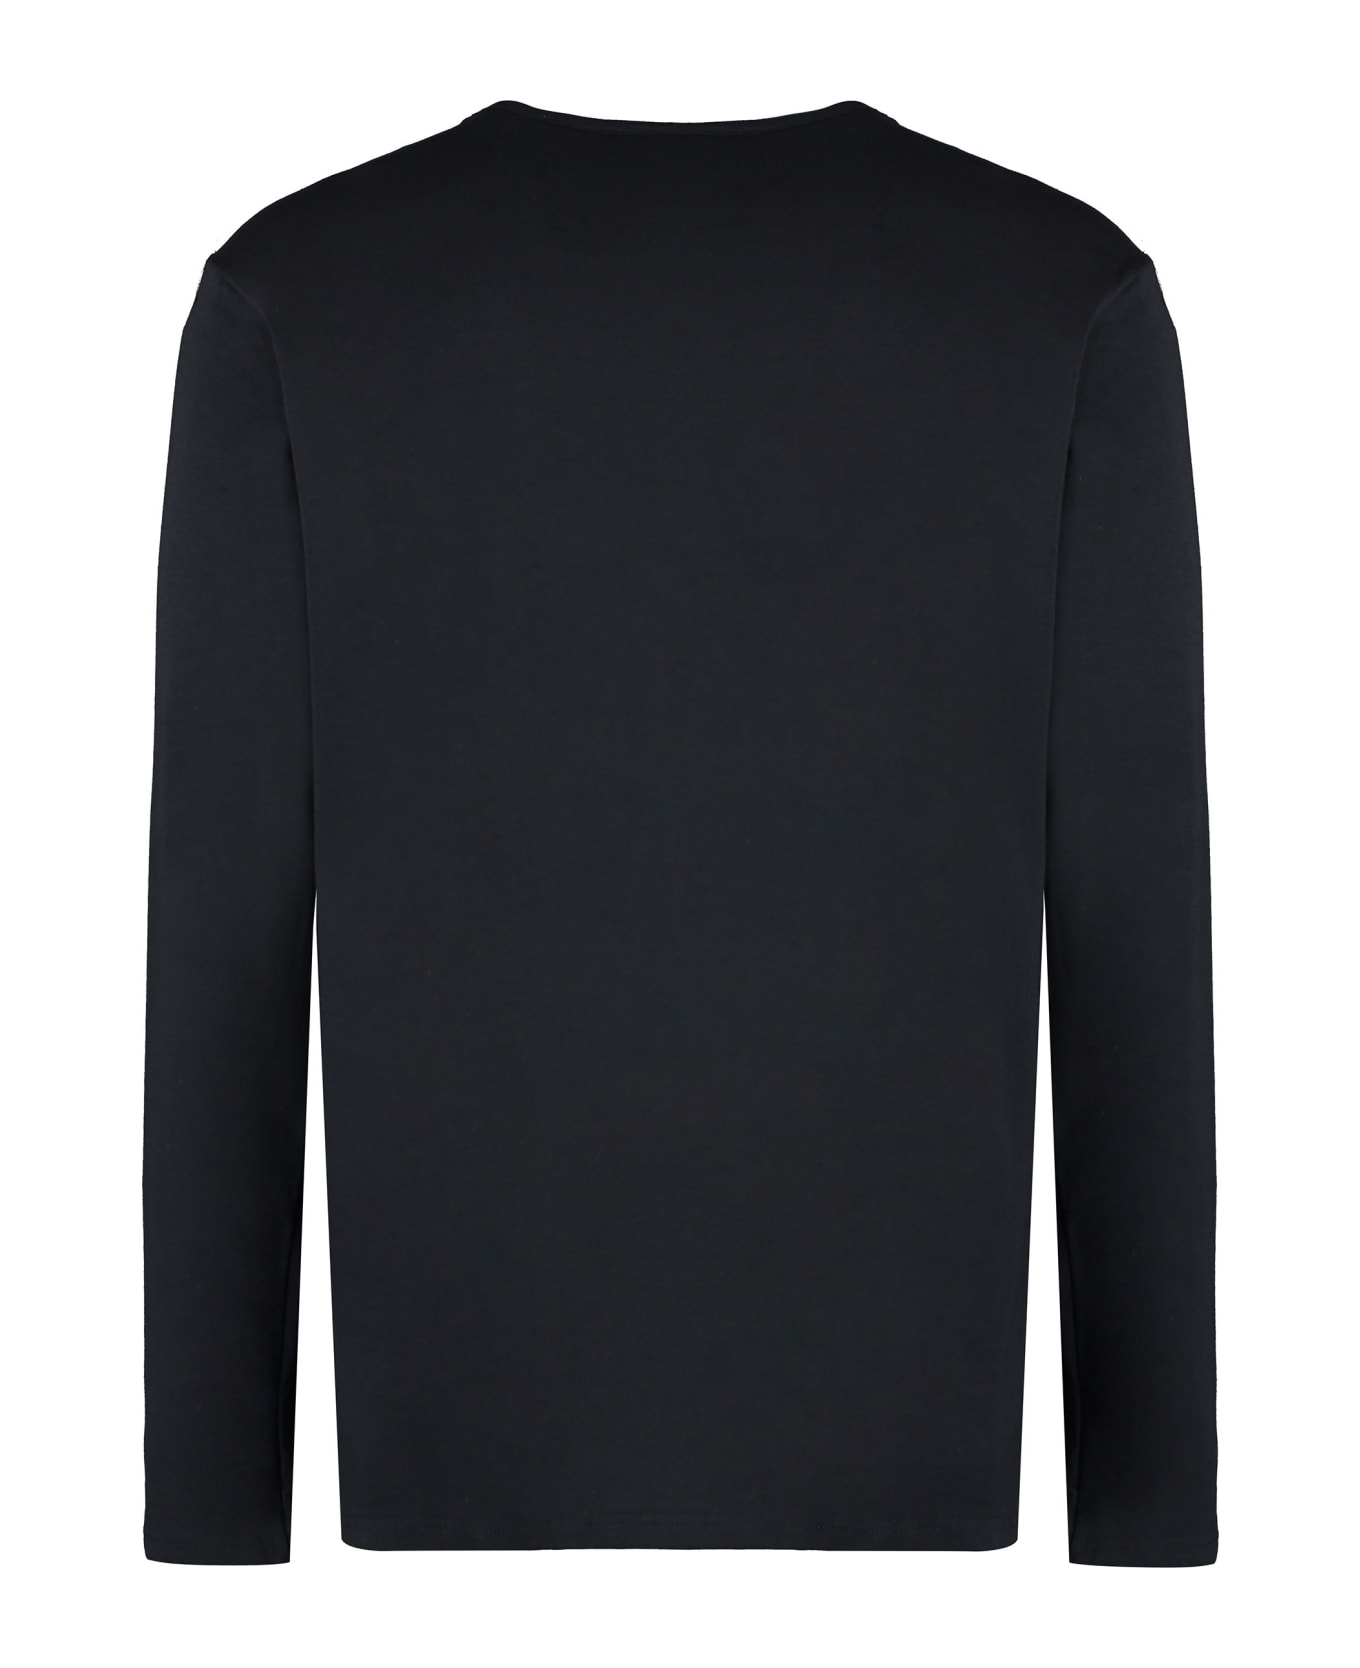 Versace Long Sleeve Cotton T-shirt - black